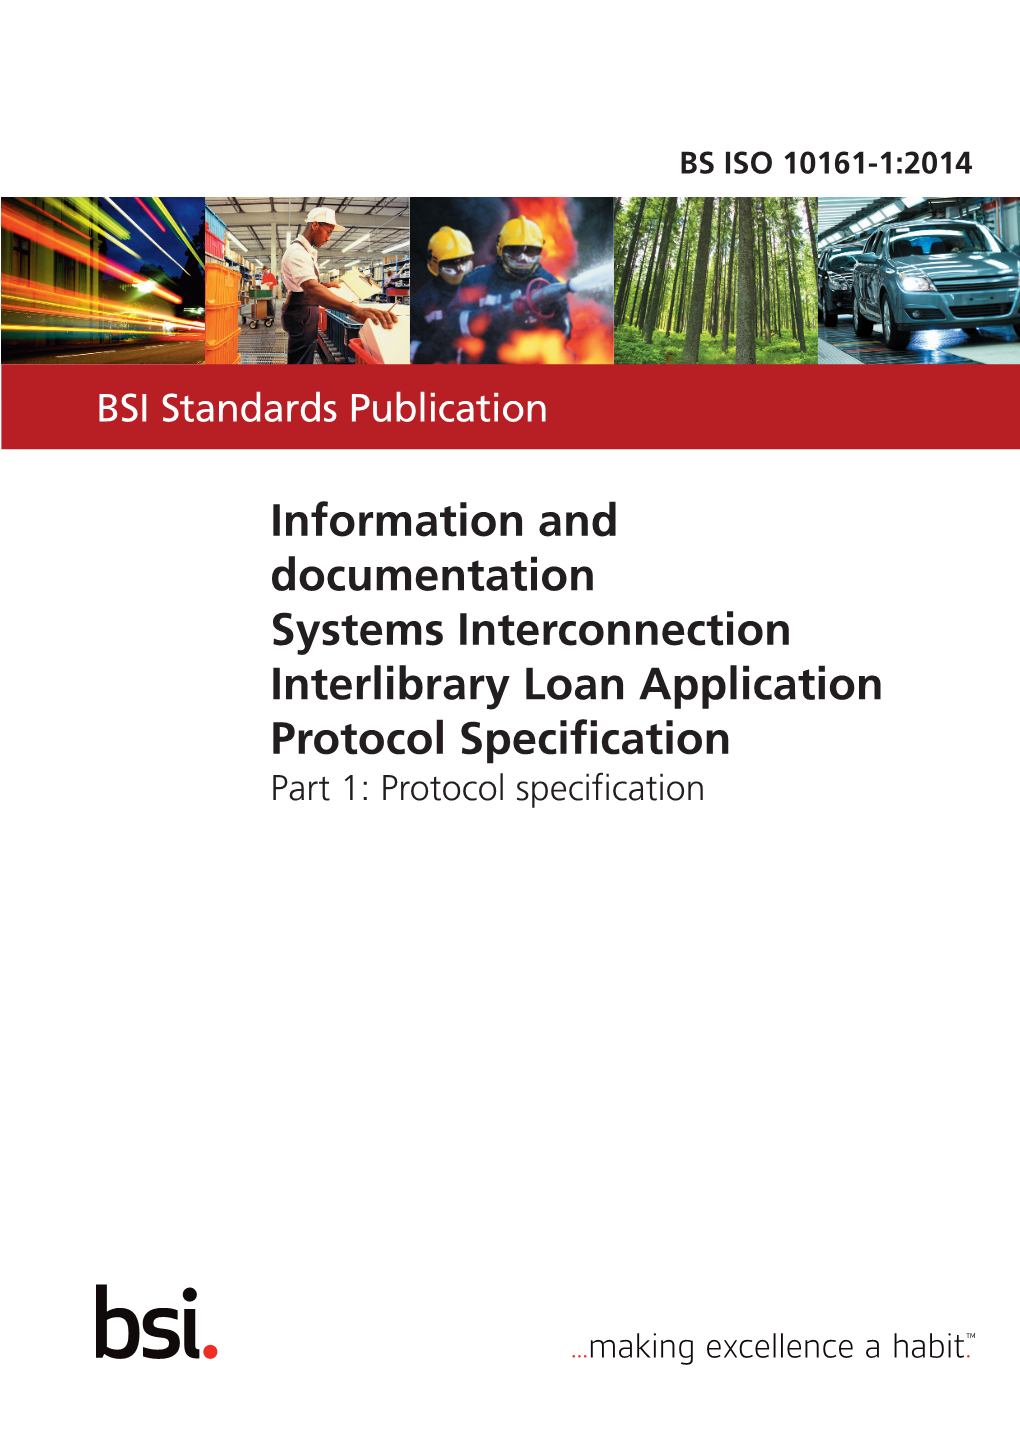 Interlibrary Loan Application Protocol Specification Part 1: Protocol Specification BS ISO 10161-1:2014 BRITISH STANDARD